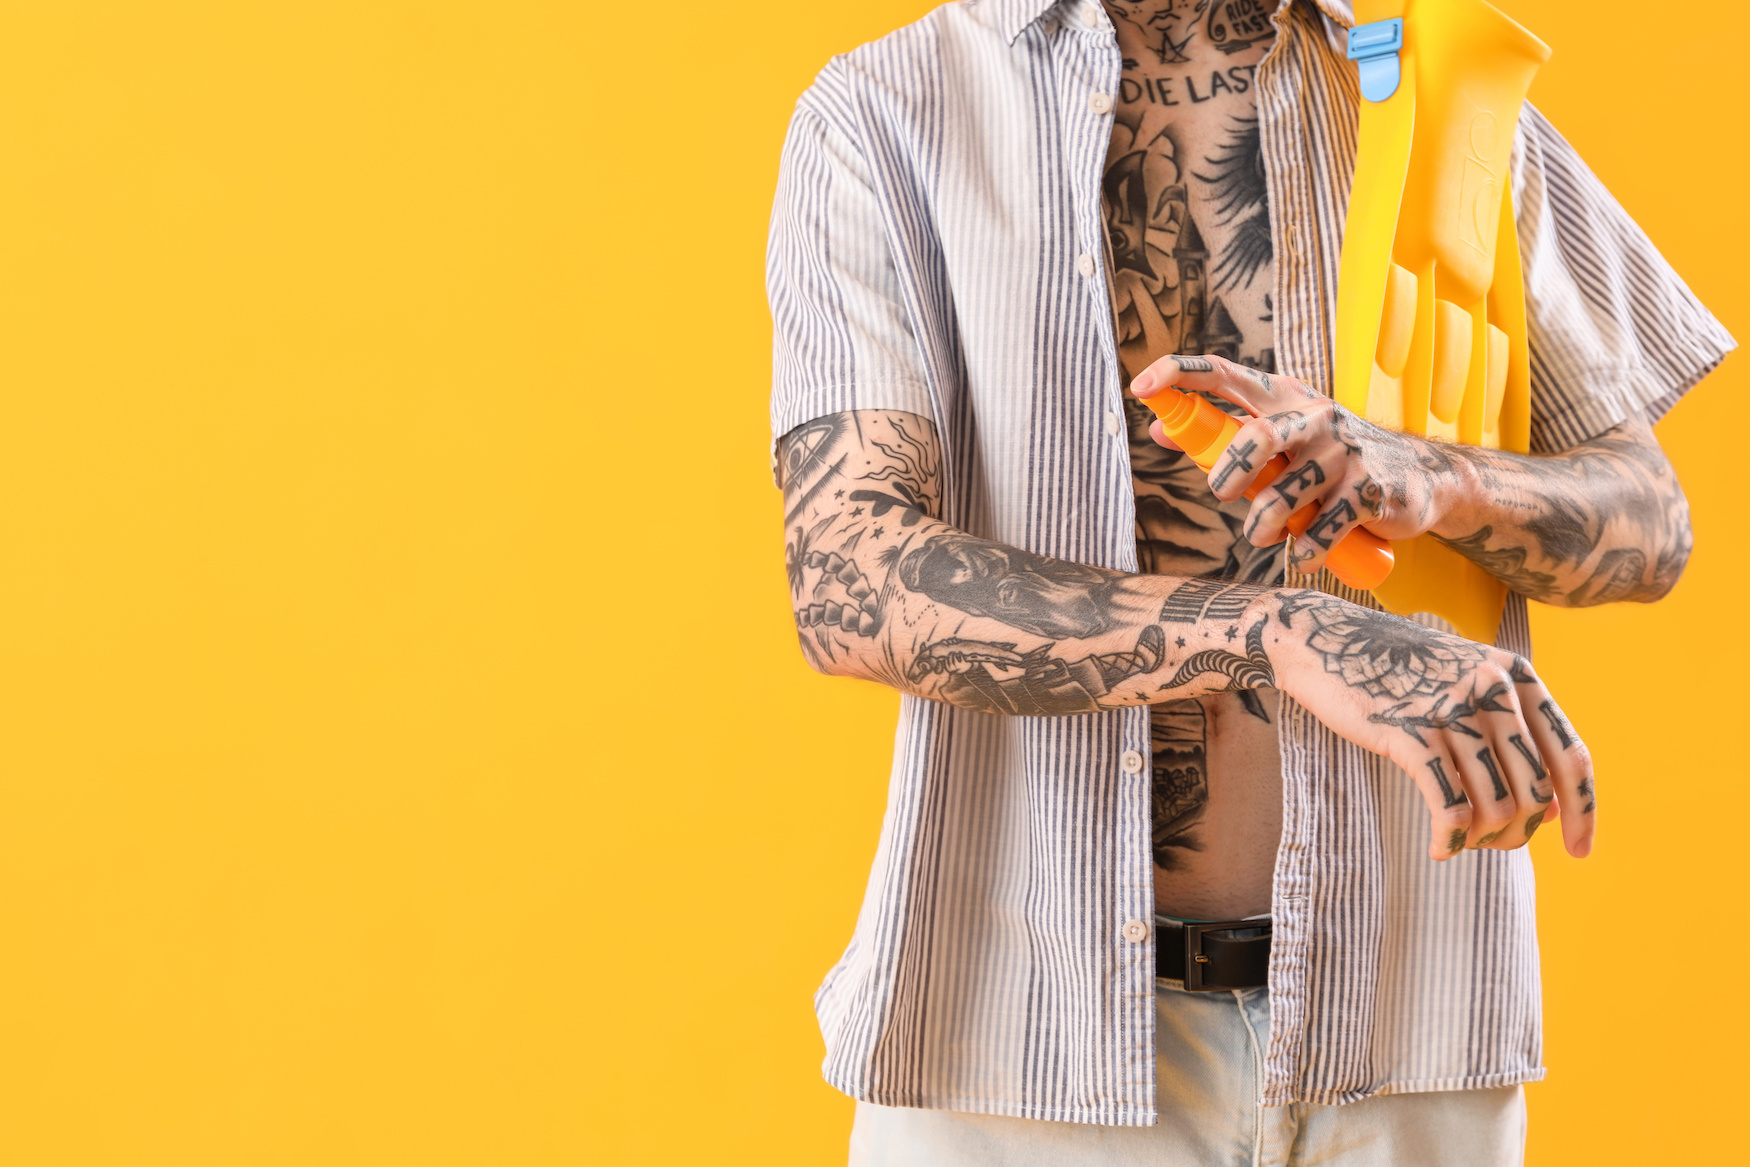 A tattooed man applying sunscreen